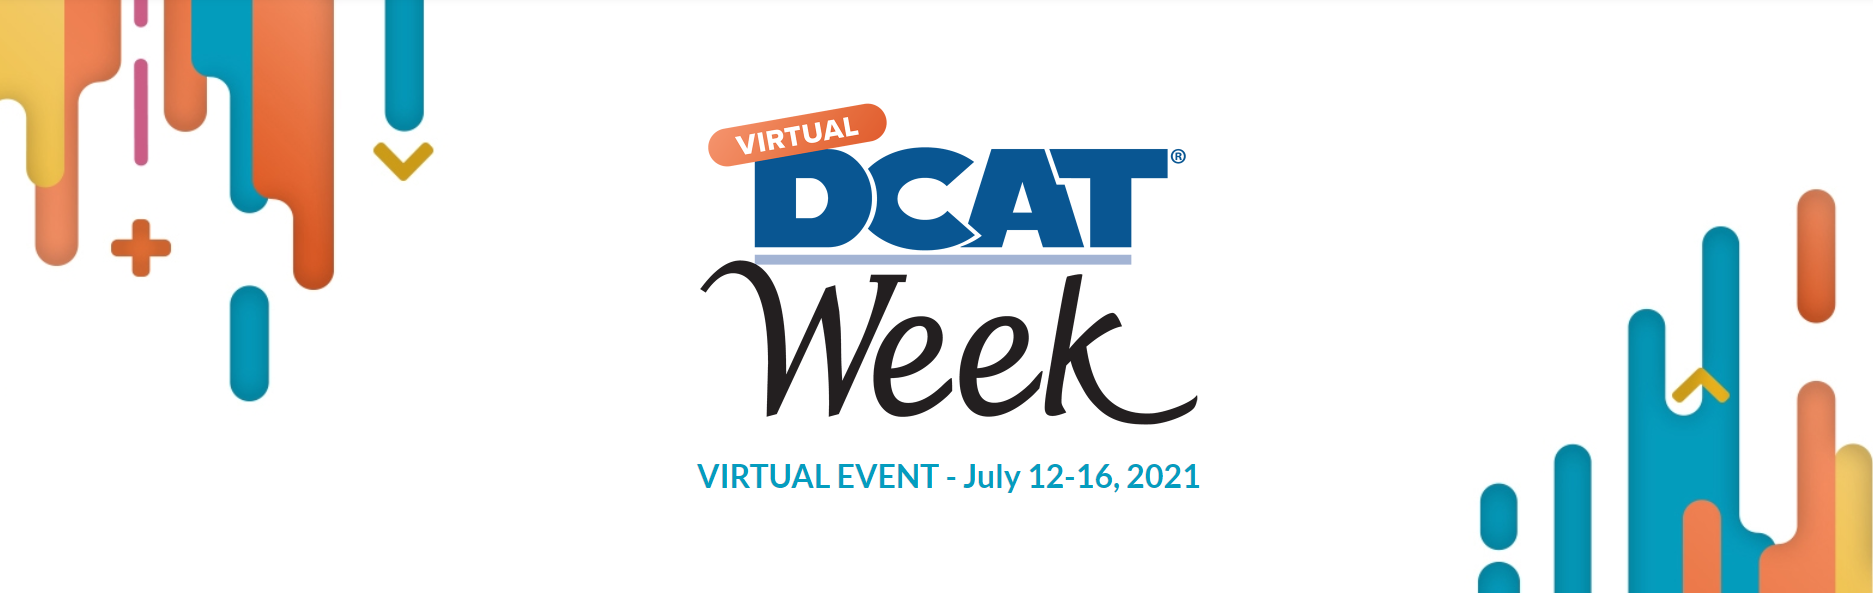 Virtual DCAT Week 2021.png